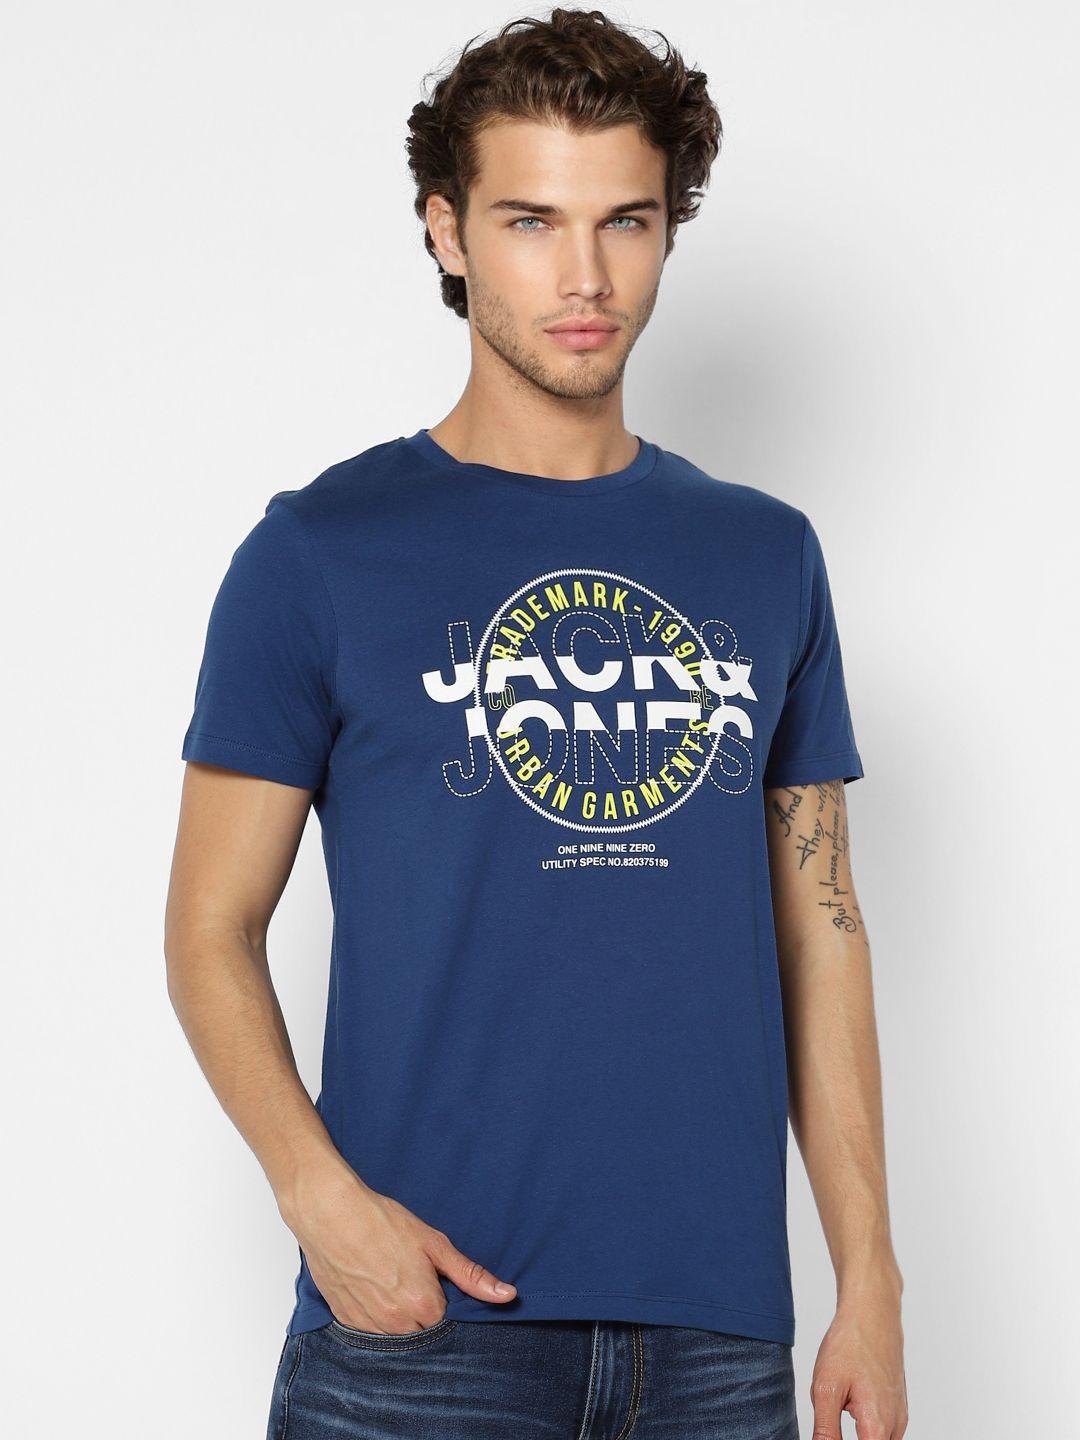 jack & jones men navy blue brand logo printed pure cotton slim fit t-shirt